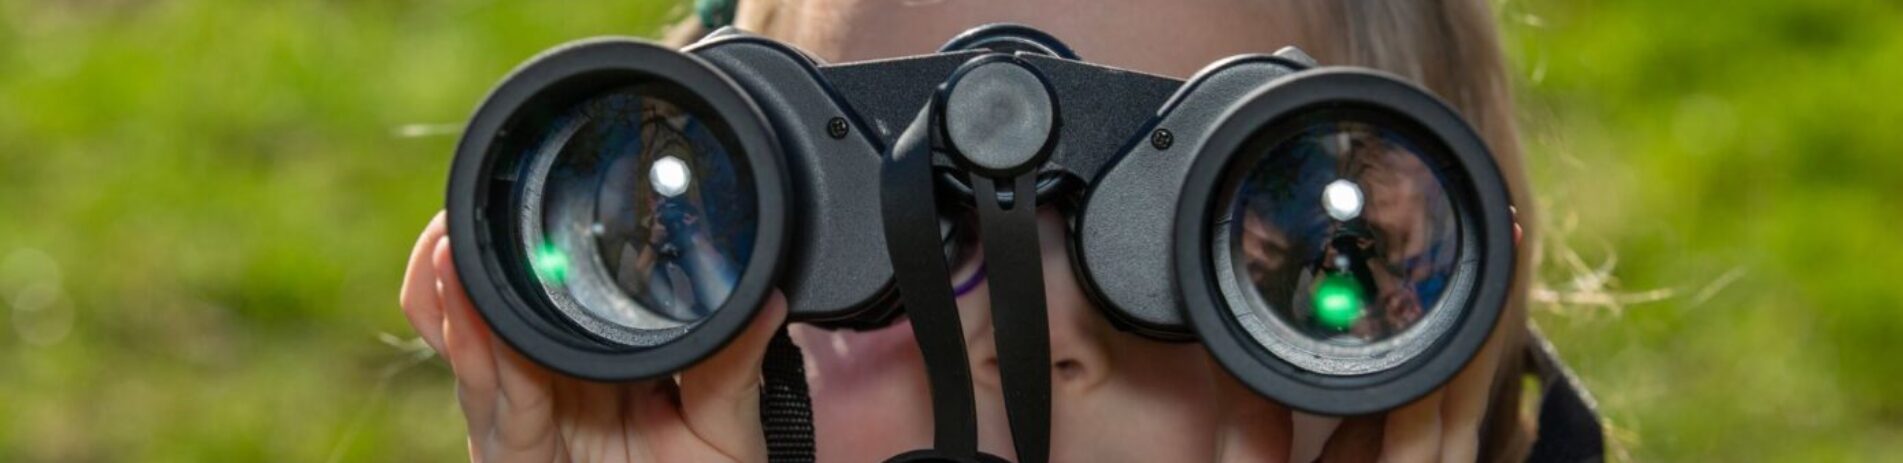 close up of child holding binoculars